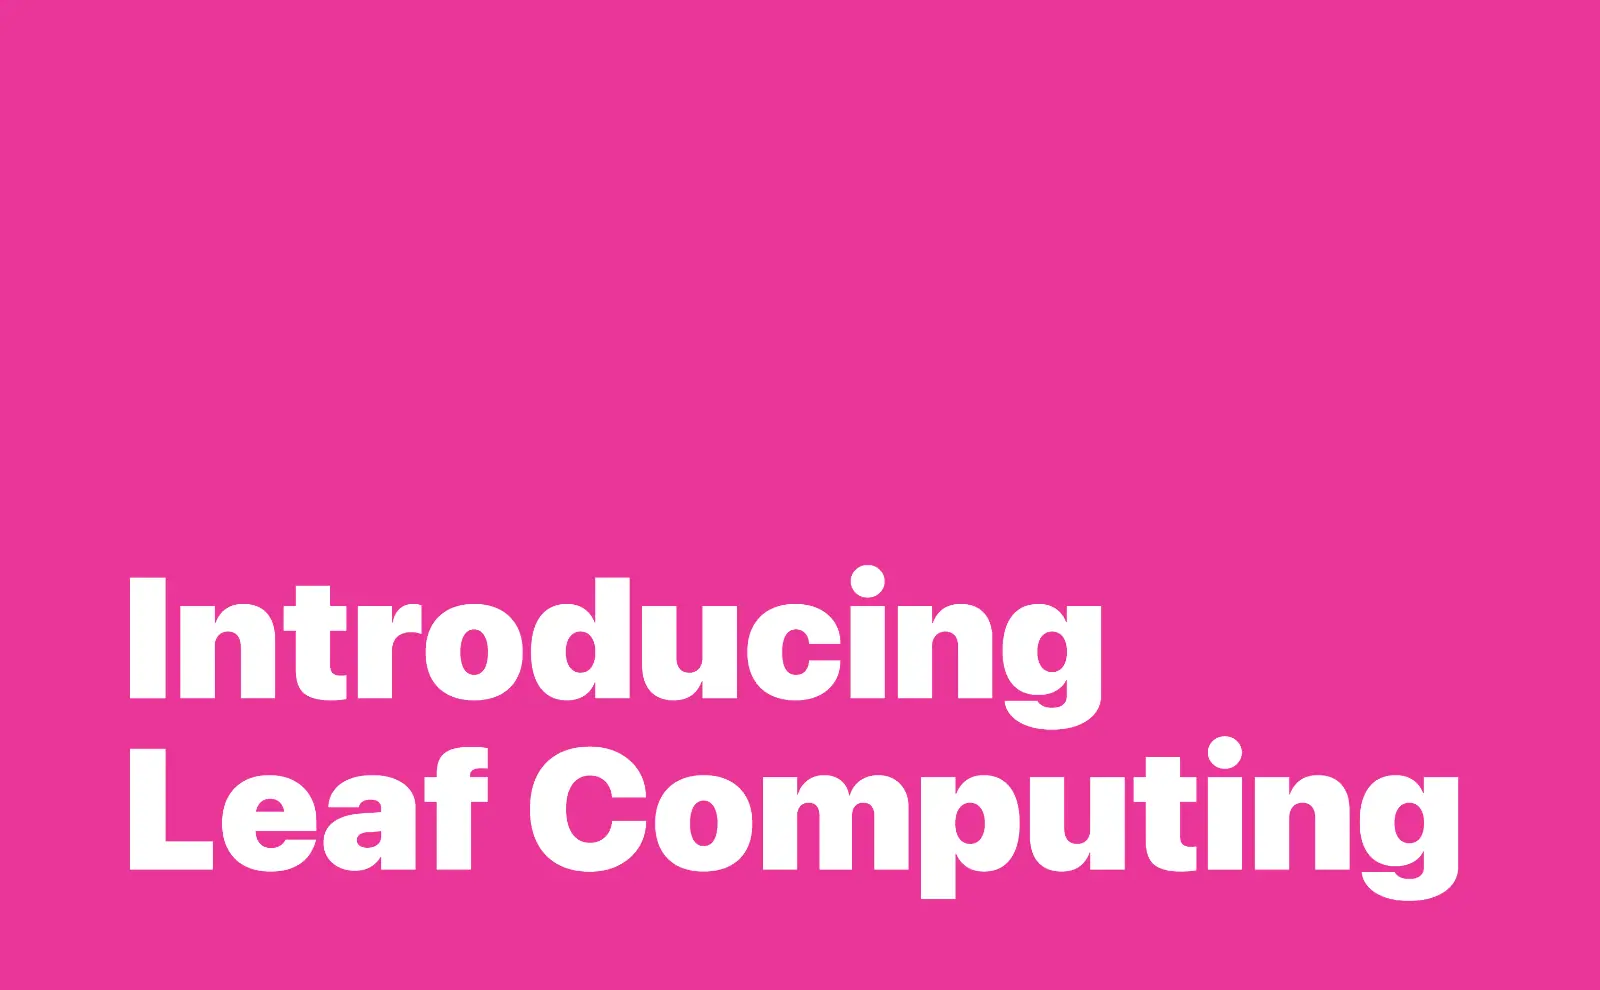 Introducing leaf computing